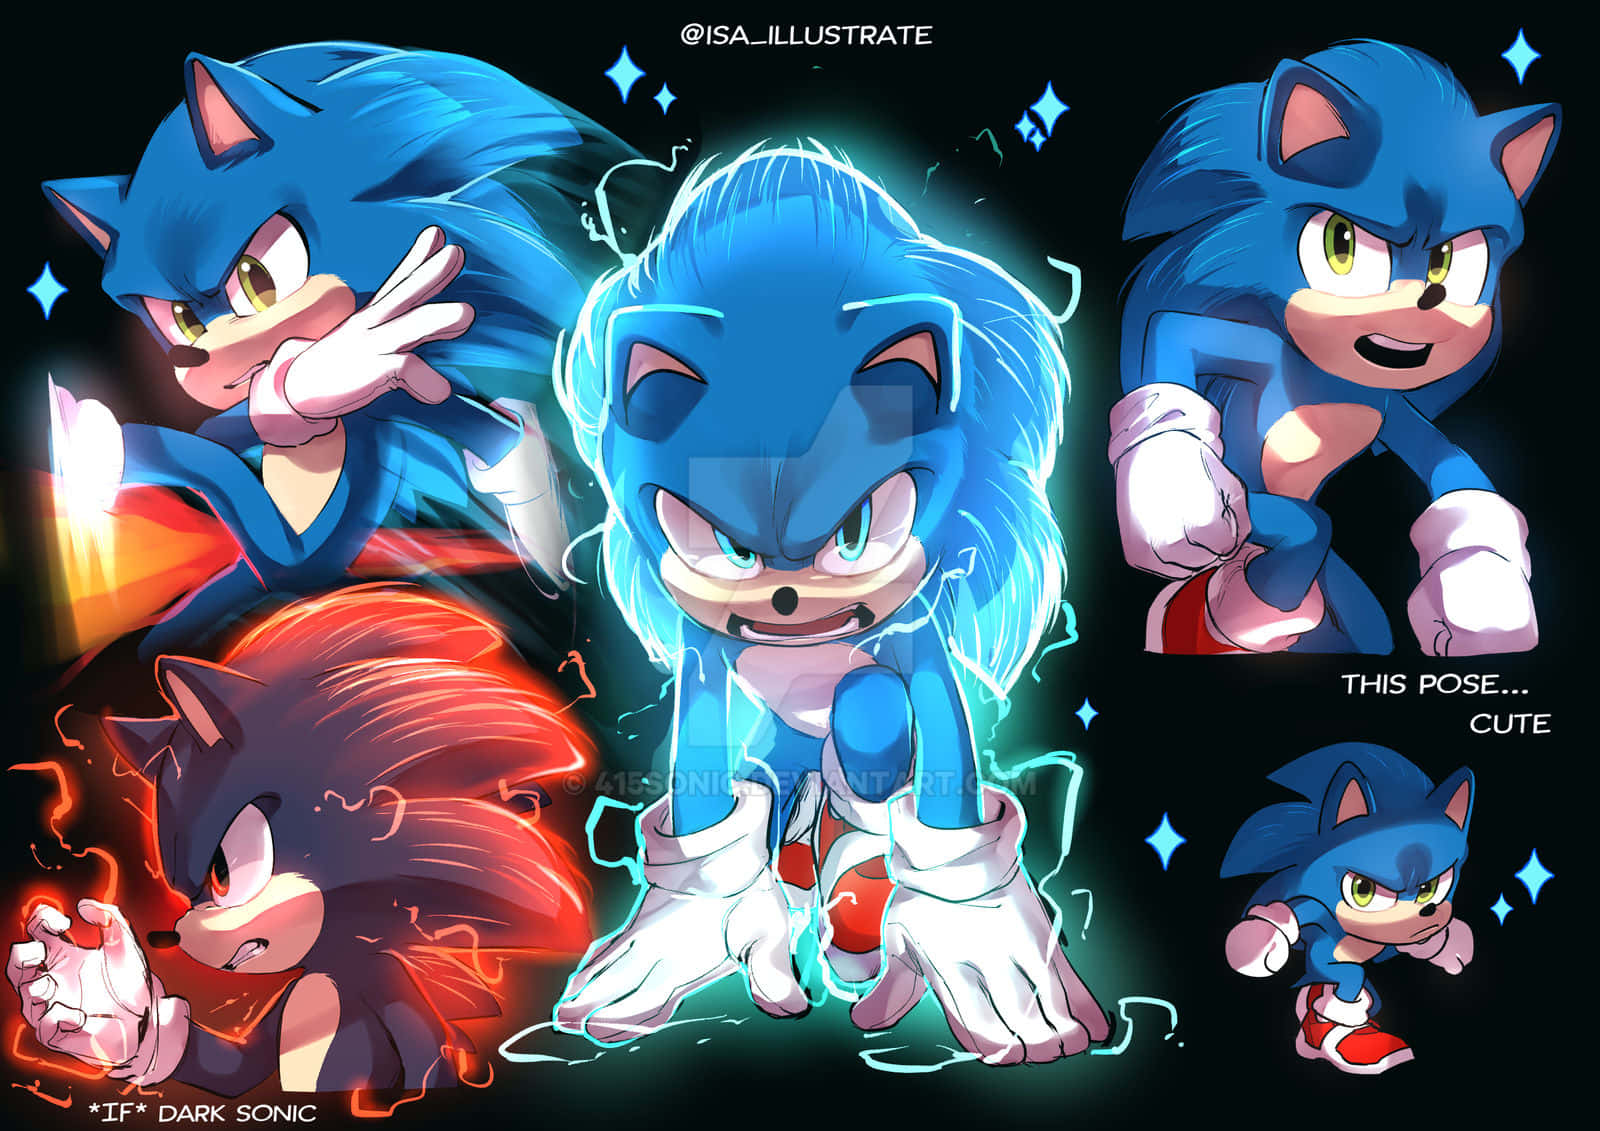 Blaze ahead with Sonic!